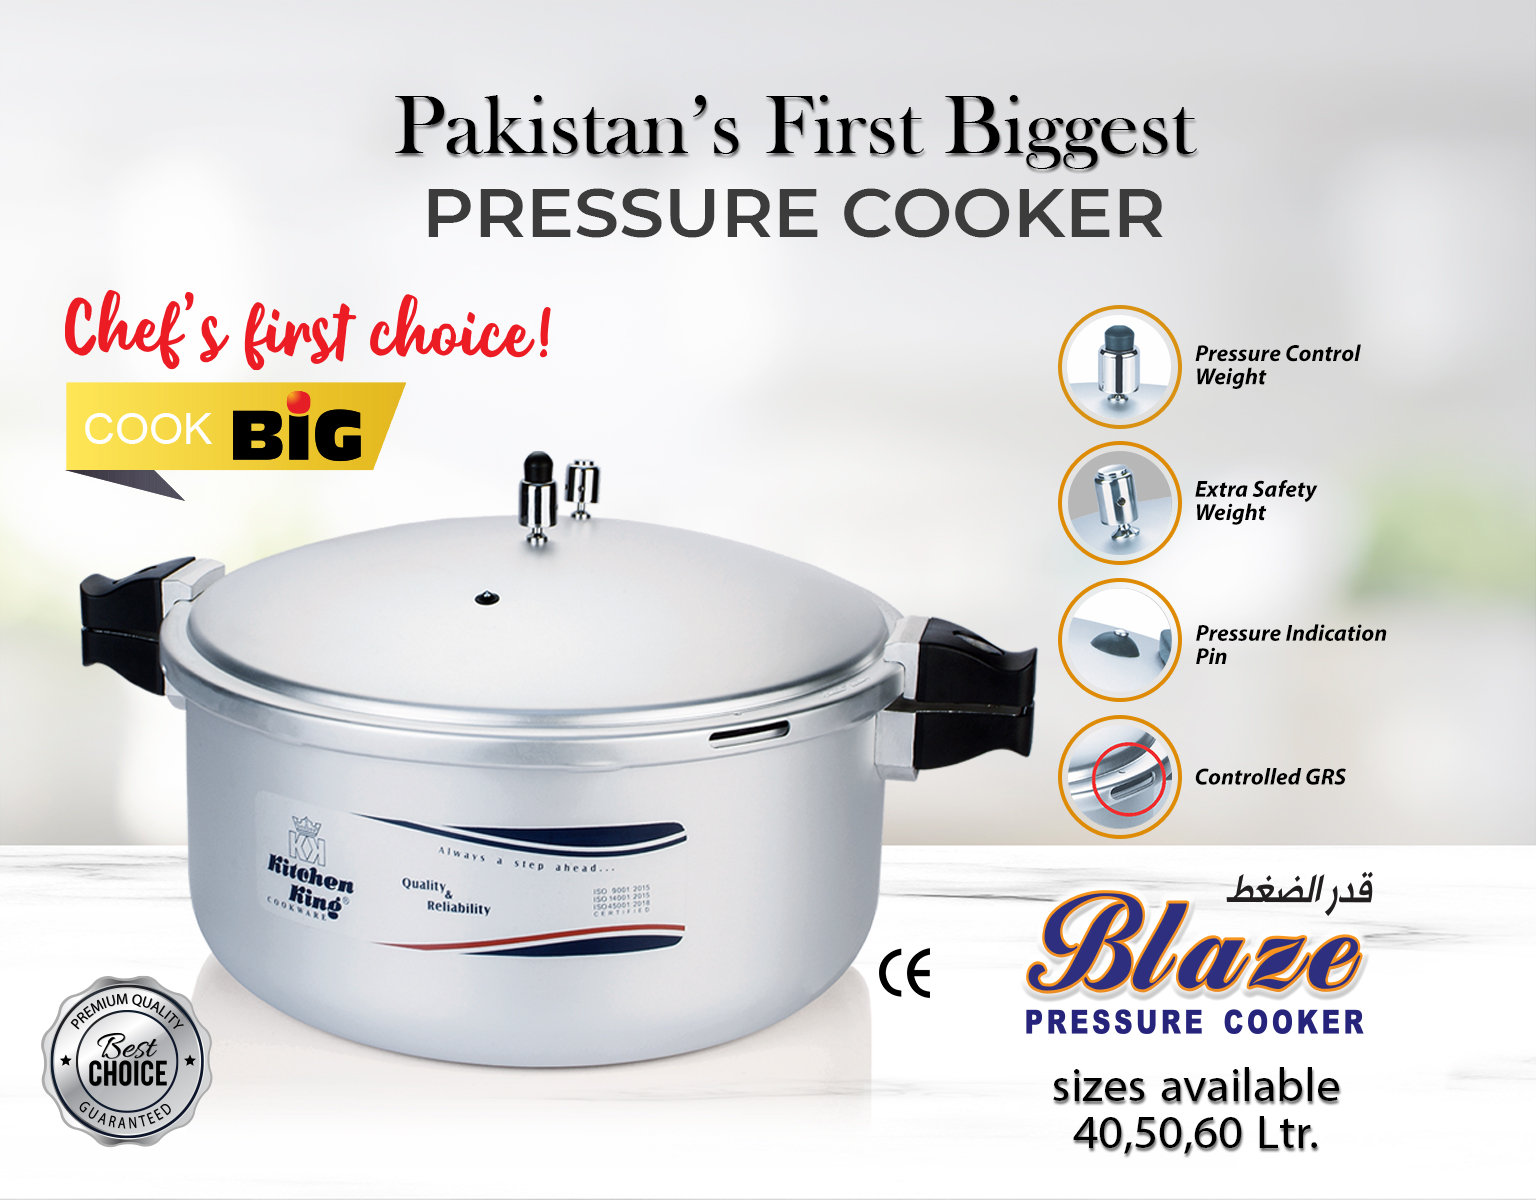 Biggest pressure cooker. best quality pressure cooker feast in pakistan, kitchen king cookware